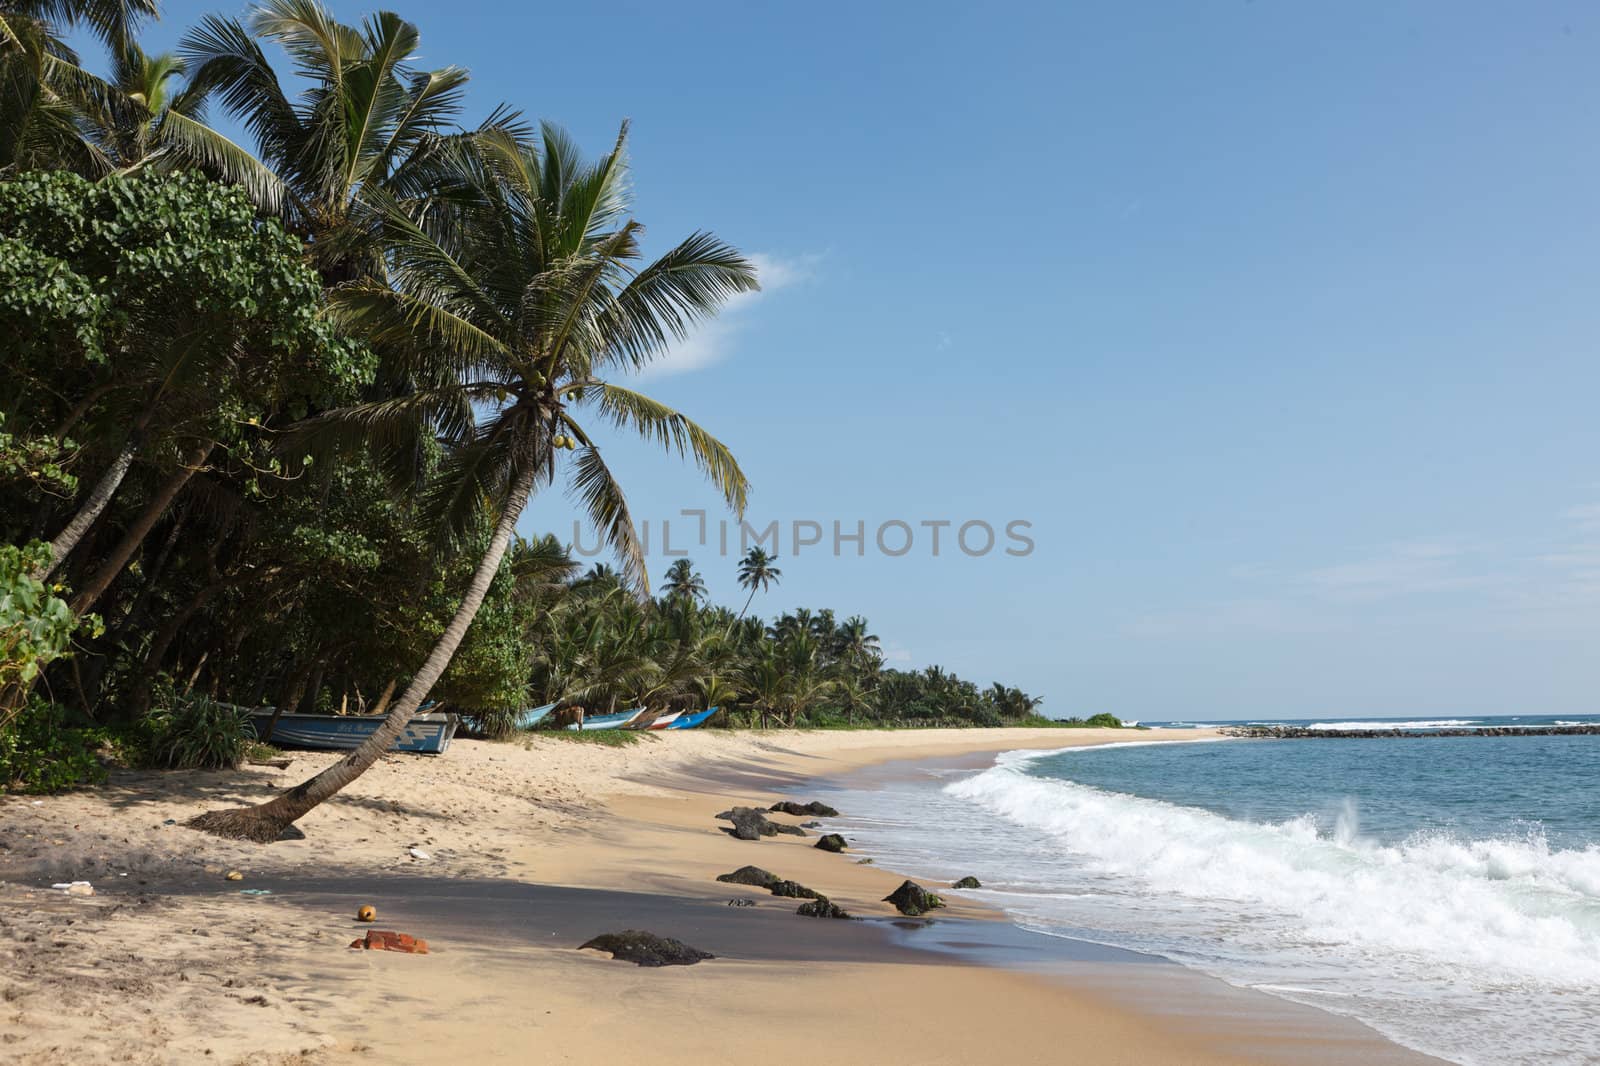 Idyllic beach. Sri Lanka by dimol